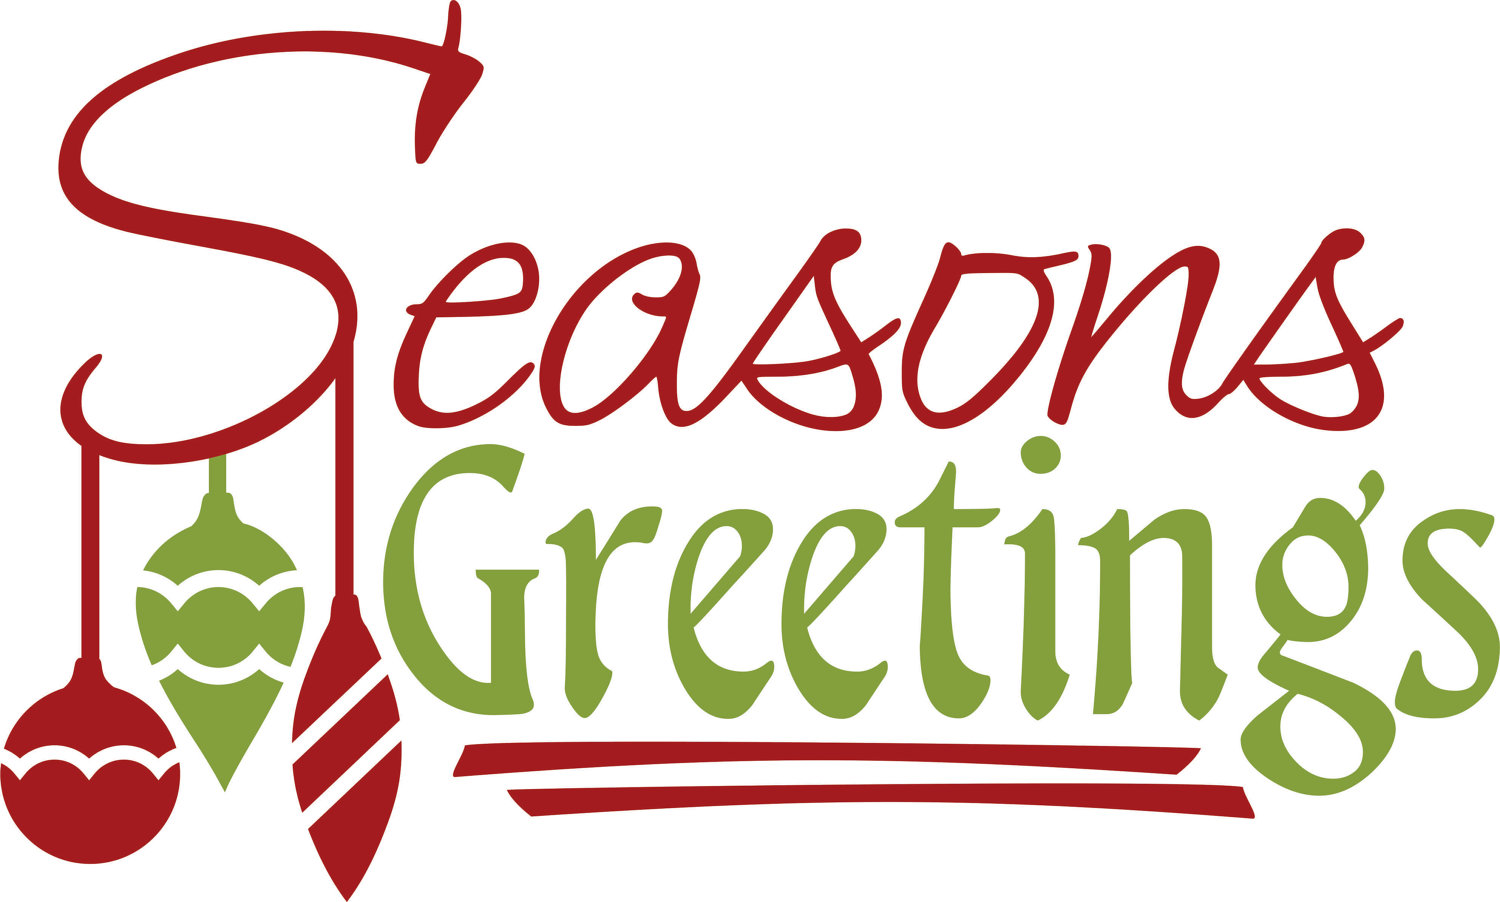 Seasons Greetings Graphics | Free Download Clip Art | Free Clip ...